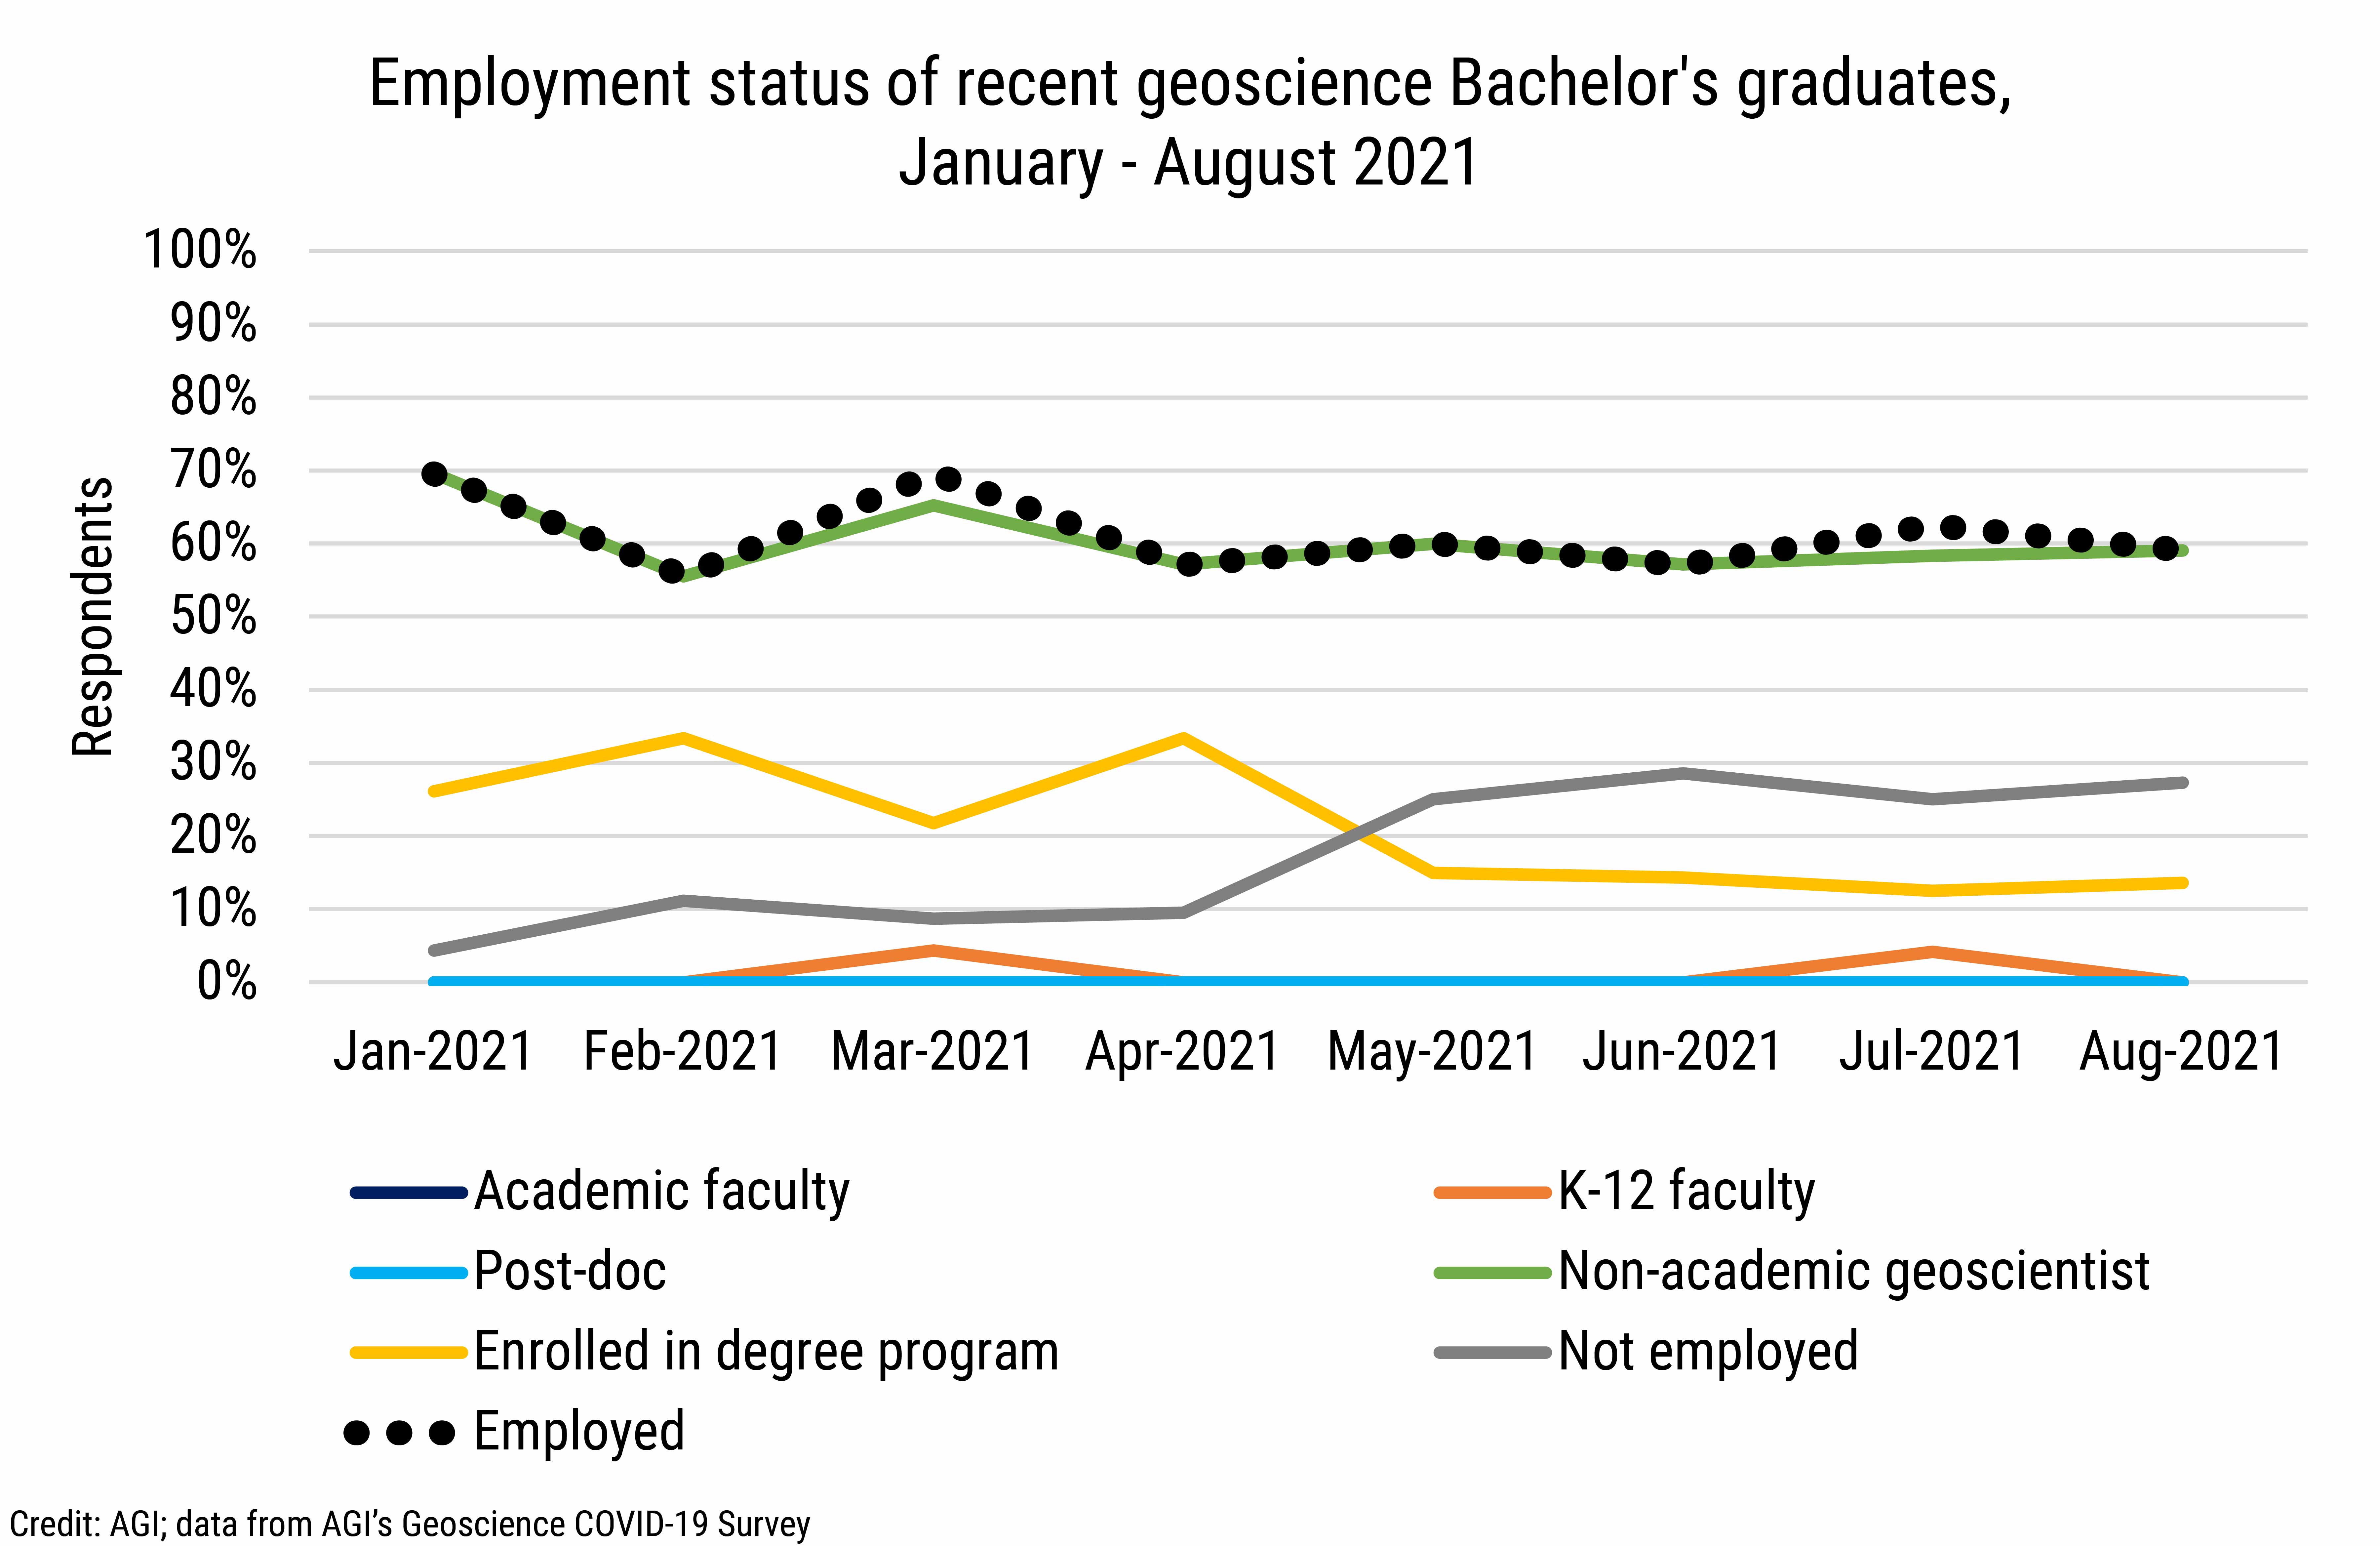 DB_2021-026 chart 07: Employment status of recent geoscience Bachelor's graduates, January - August 2021 (Credit: AGI; data from AGI's Geoscience COVID-19 Survey)